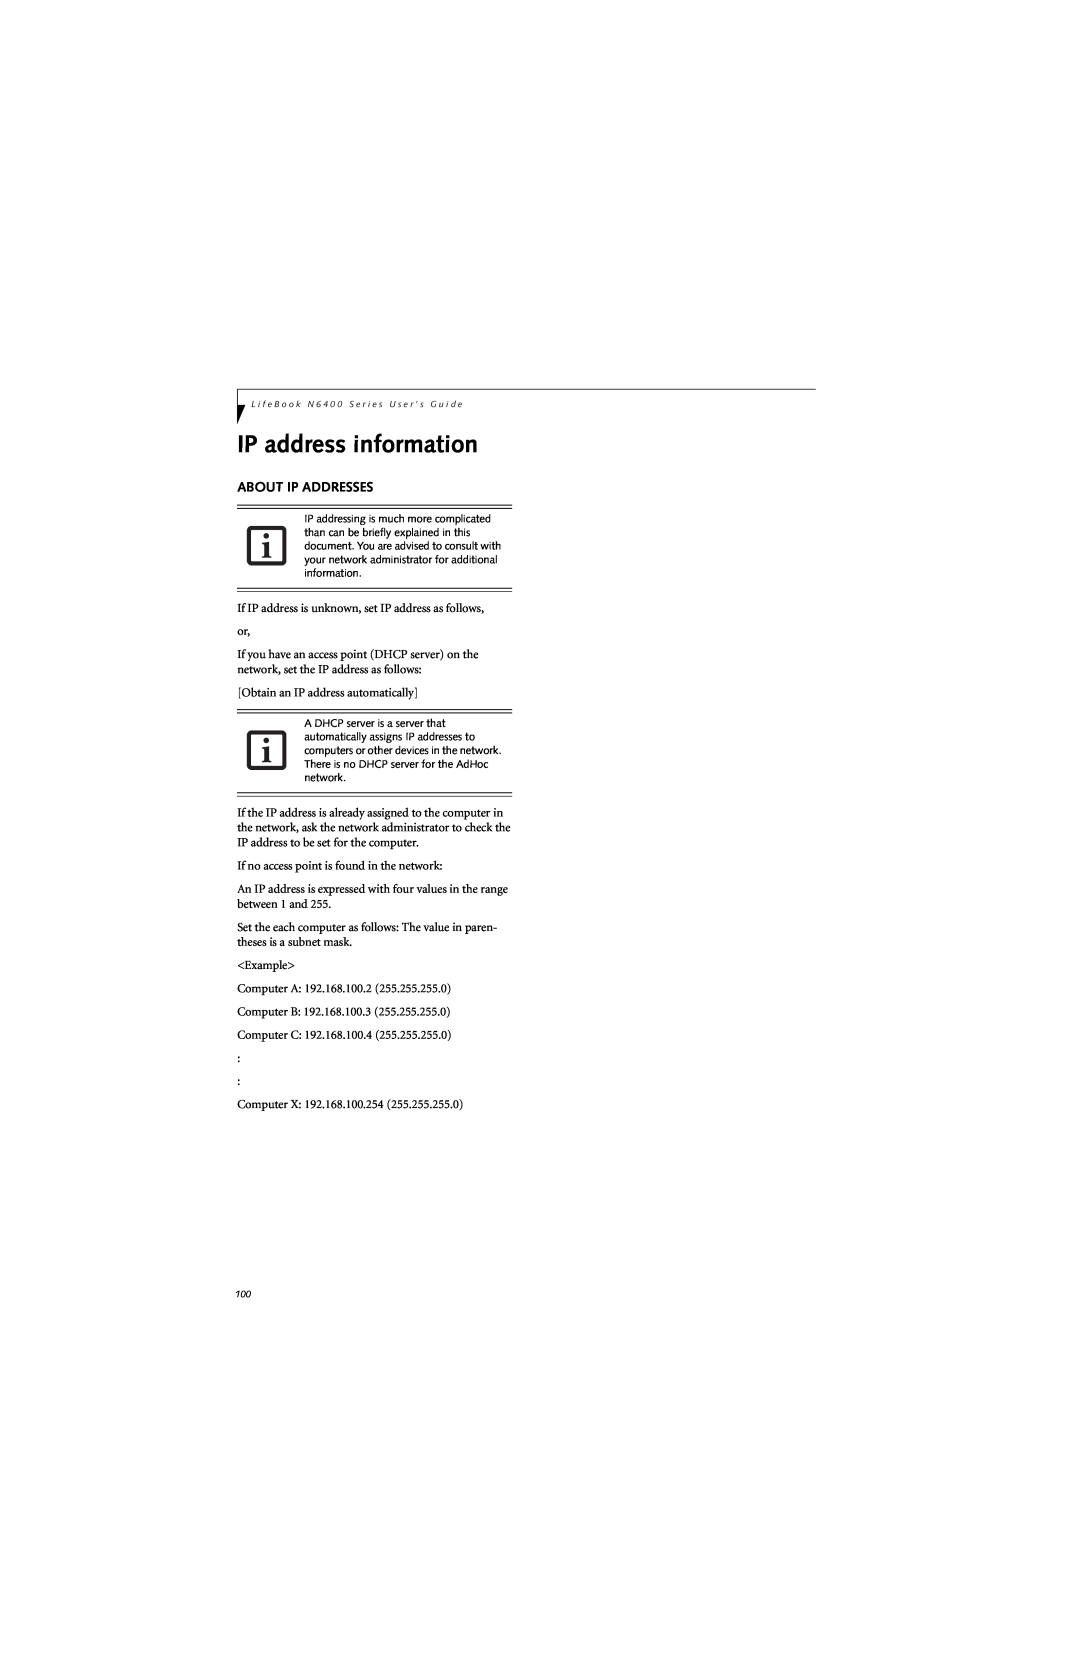 Fujitsu N6420 manual IP address information, About Ip Addresses 